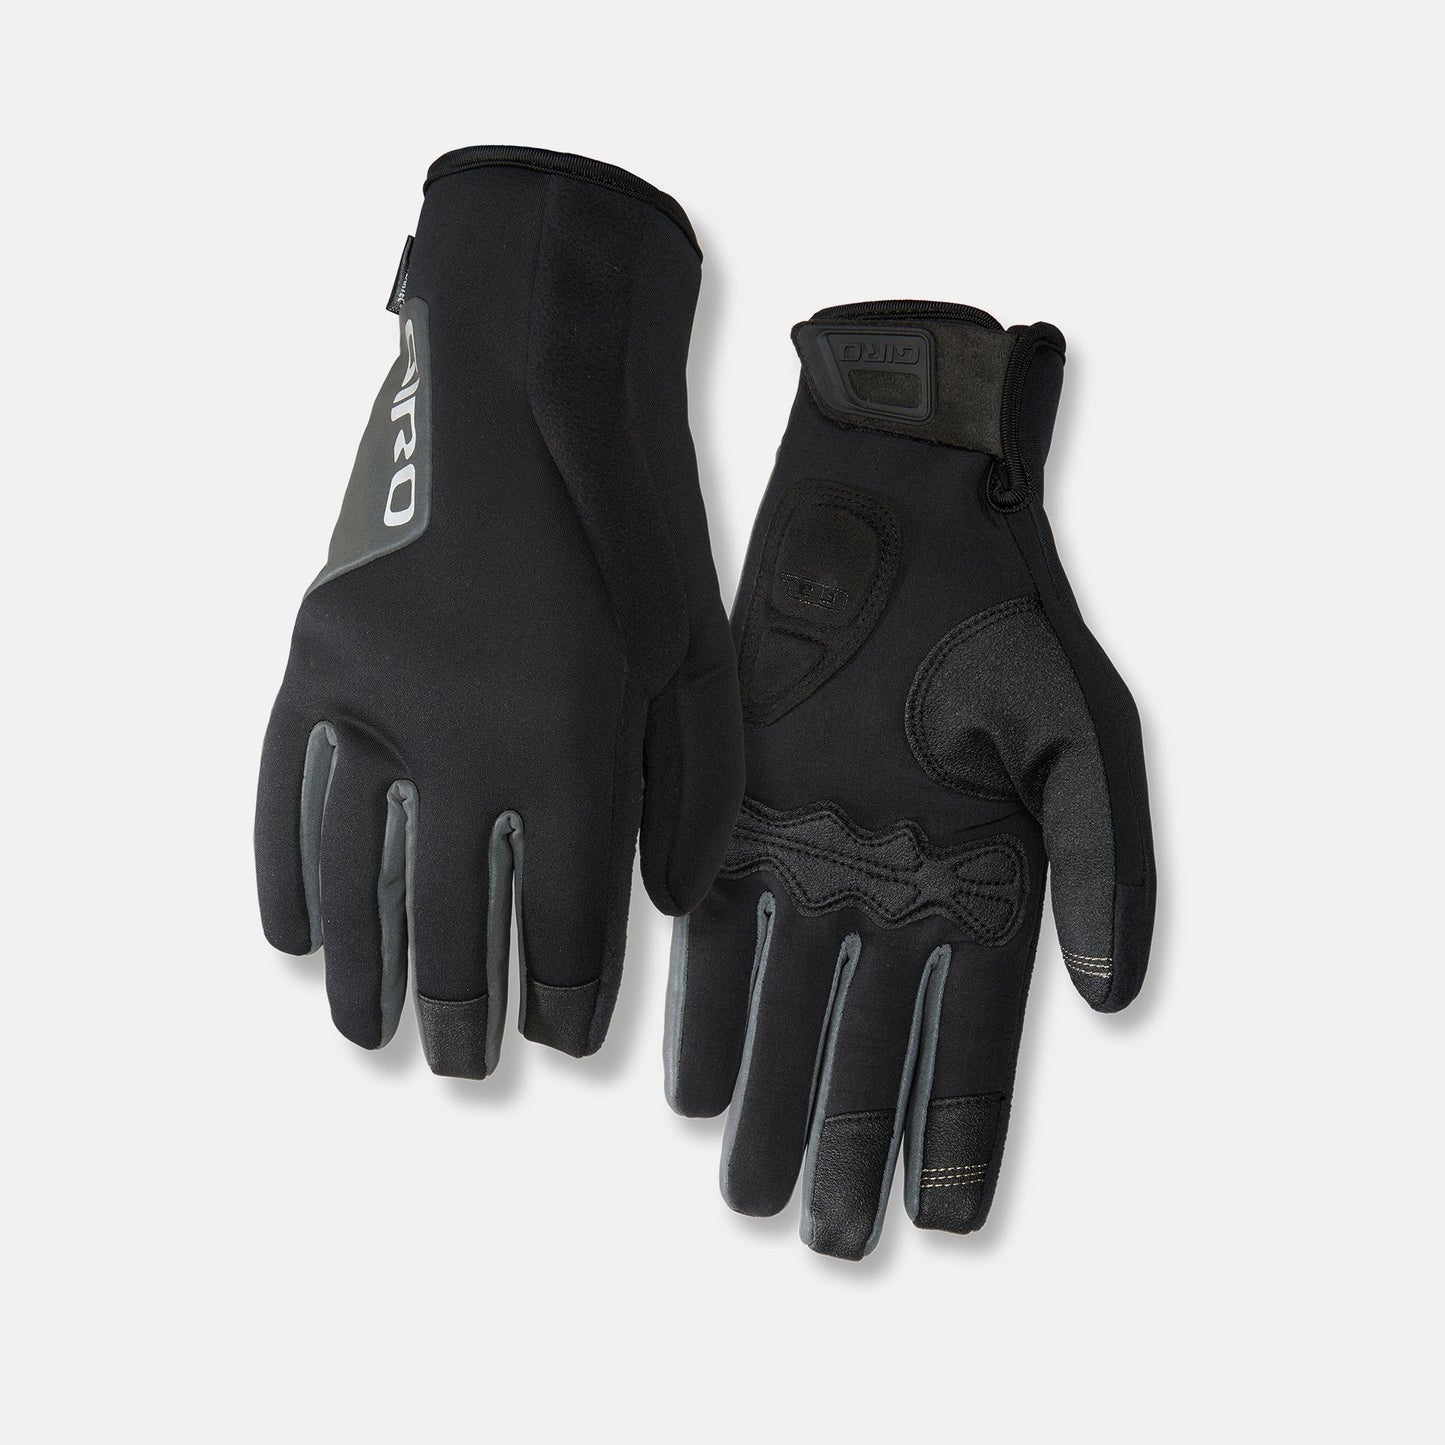 Giro Ambient 2.0 Winter Gloves - Black - Size M